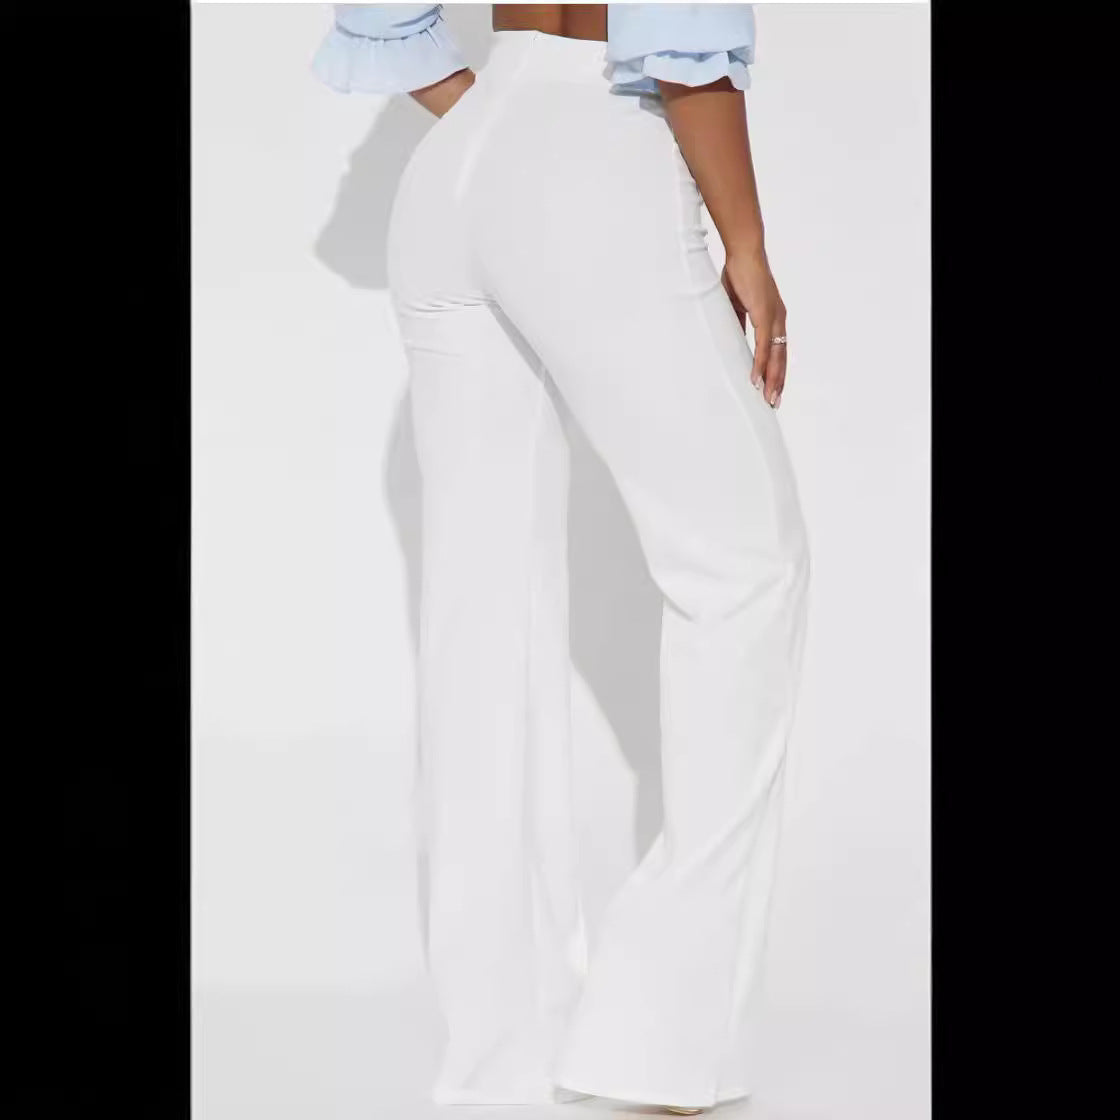 New Women's Slimming White High-waist Straight-leg Pants